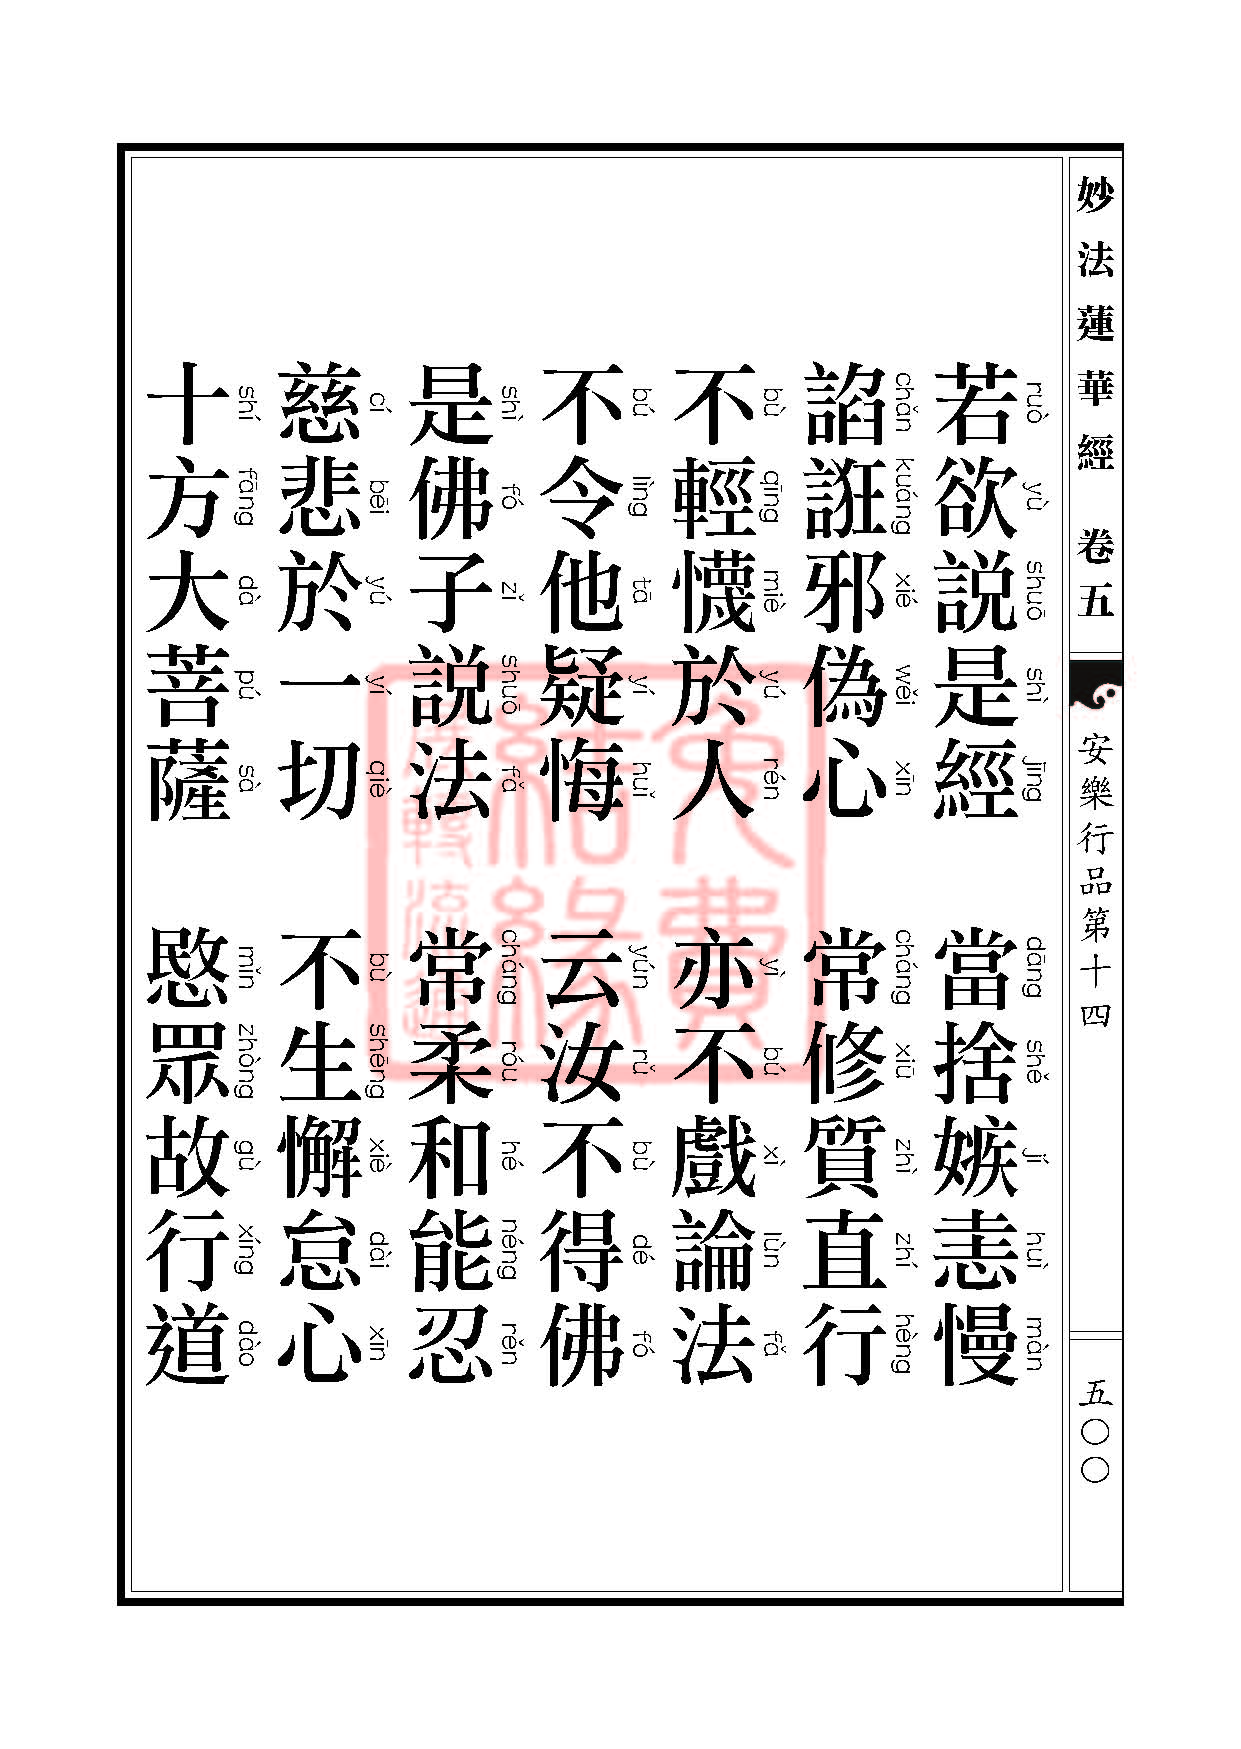 Book_FHJ_HK-A6-PY_Web_页面_500.jpg